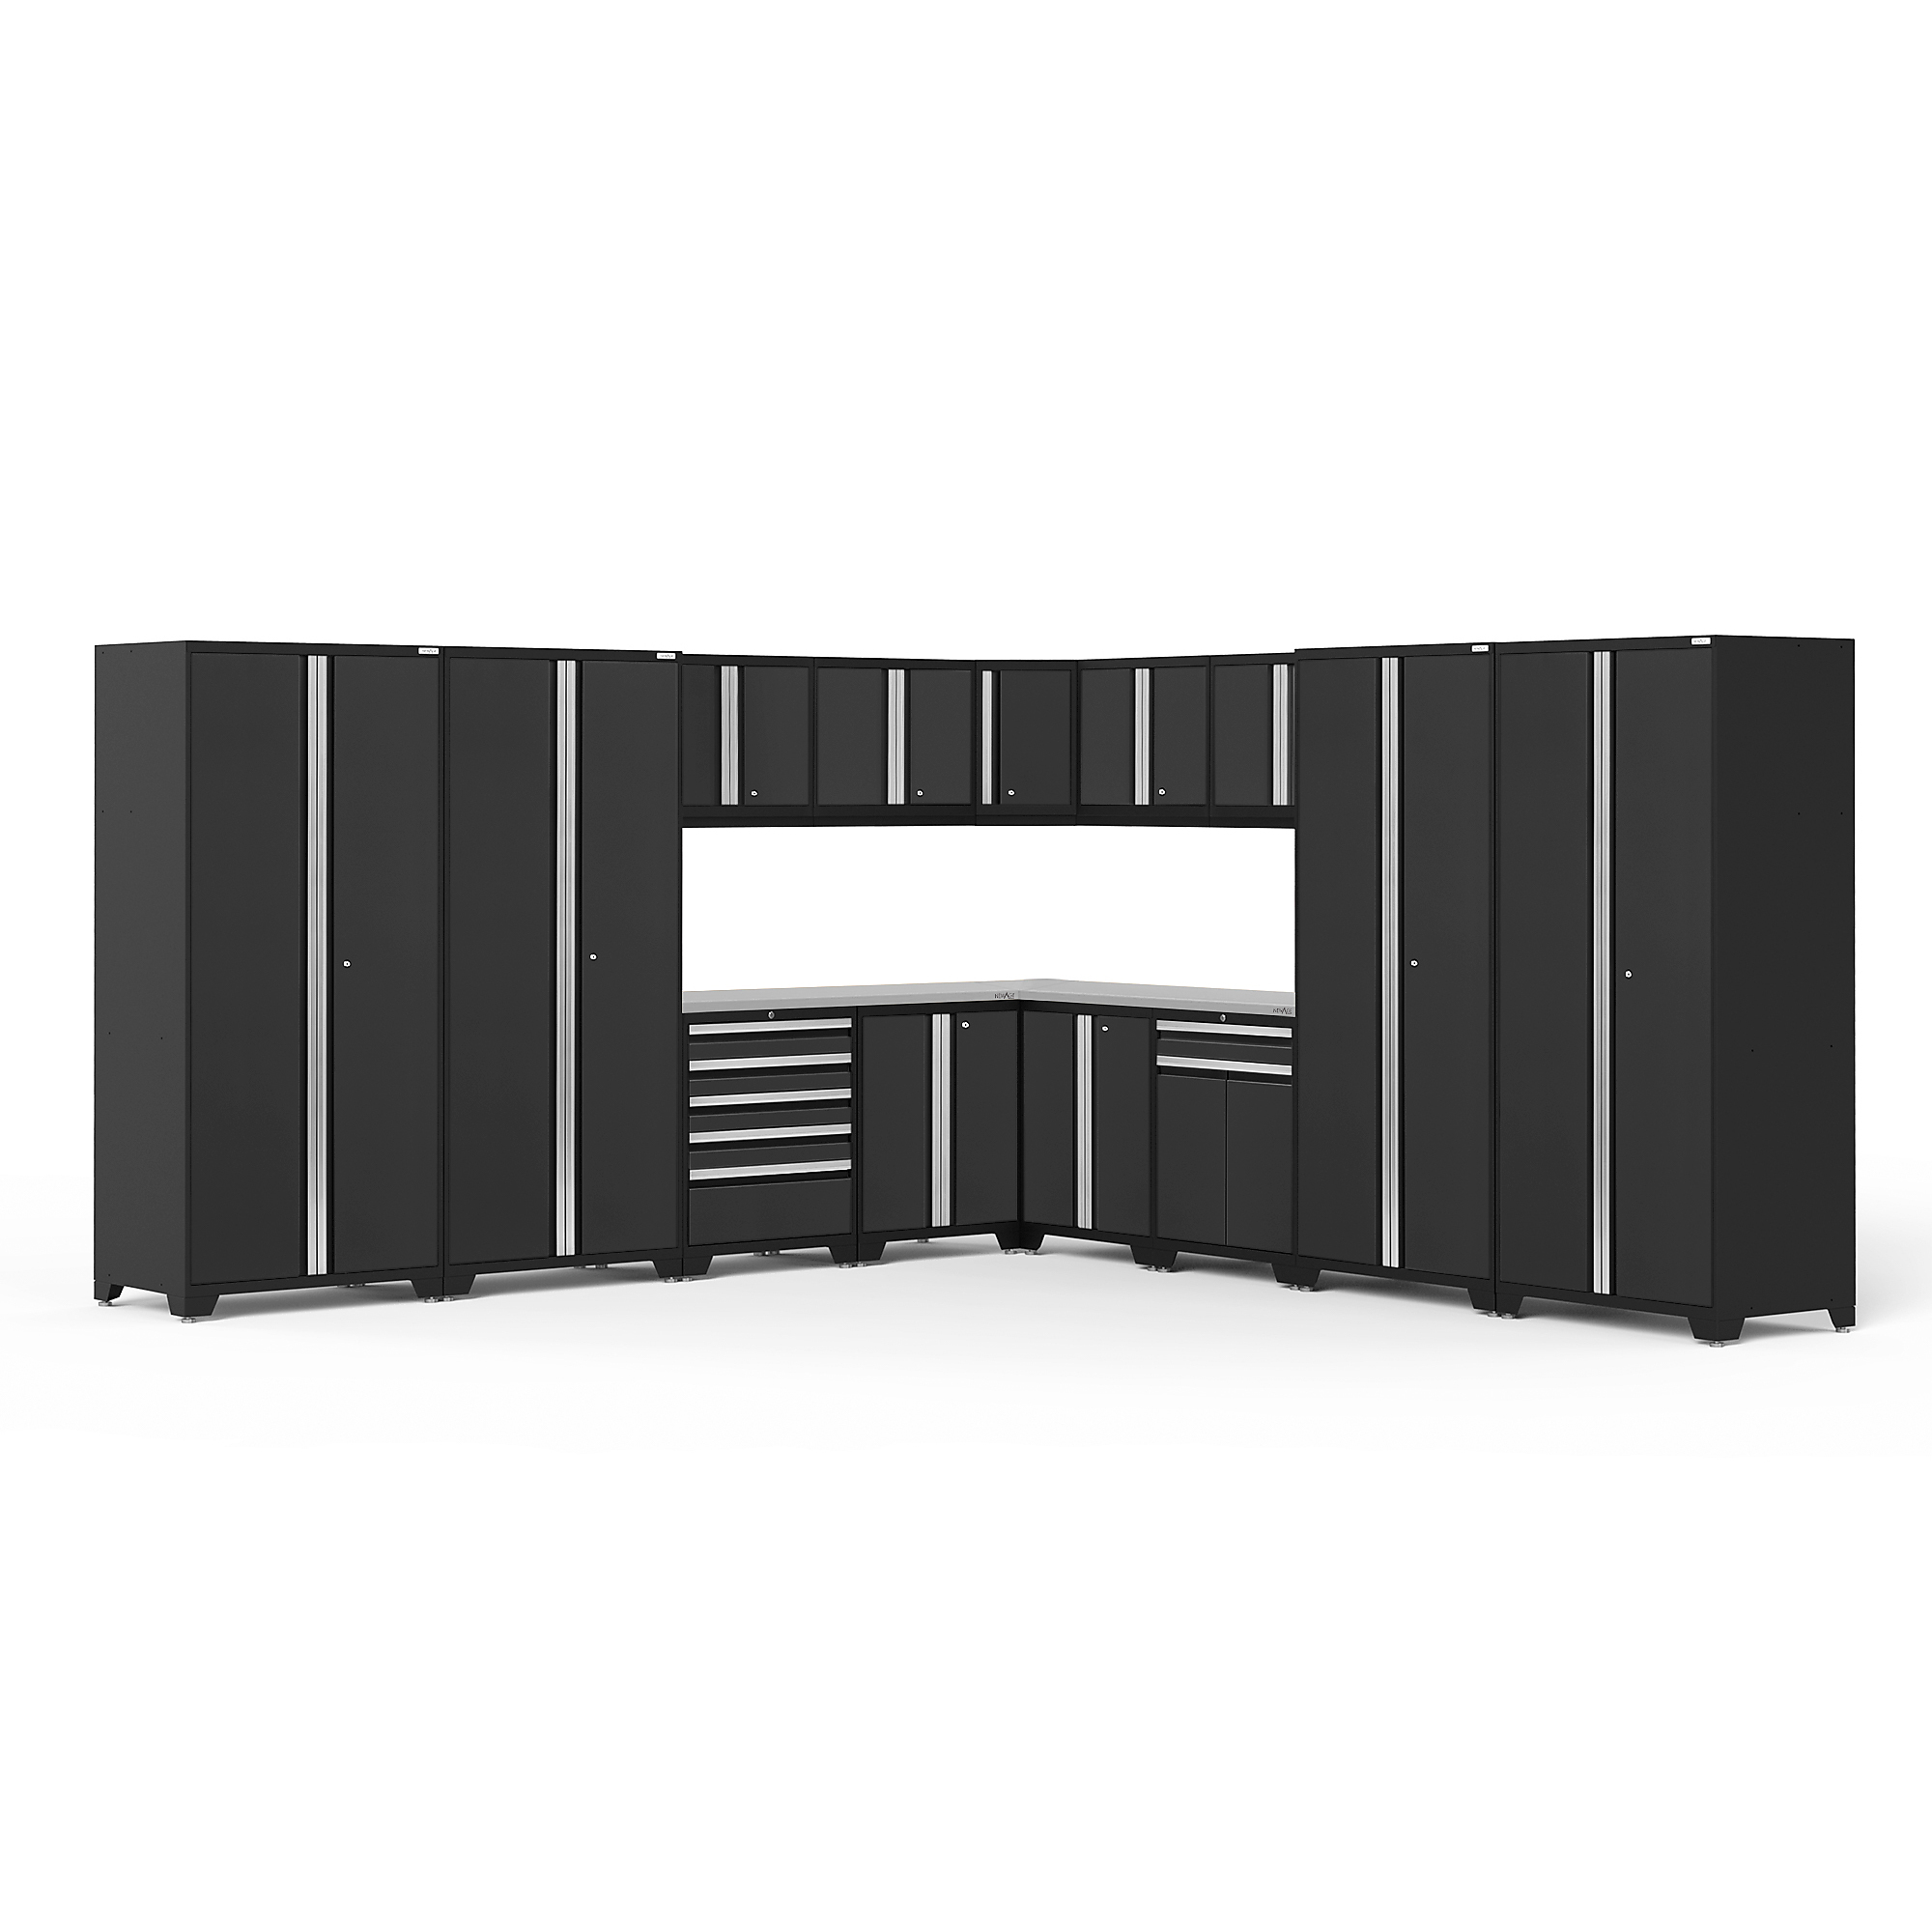 NewAge Products, Pro Series Black 16-Piece Steel Garage Cabinet Set, Width 304 in, Height 84.75 in, Depth 24 in, Model 64325